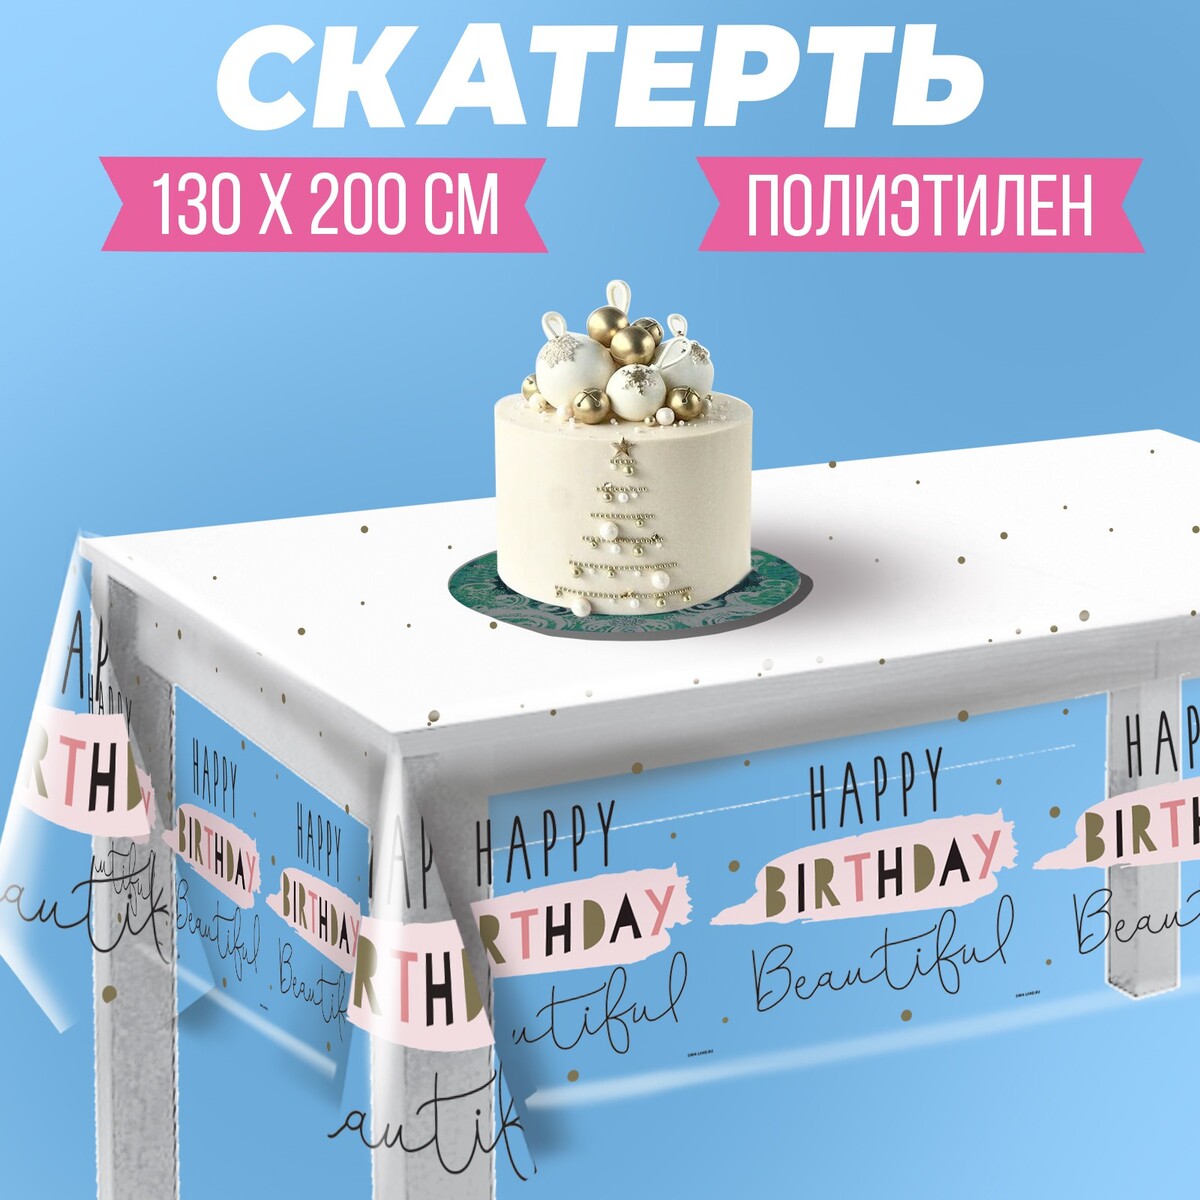 Скатерть одноразовая happy birthday, 130 × 200 см